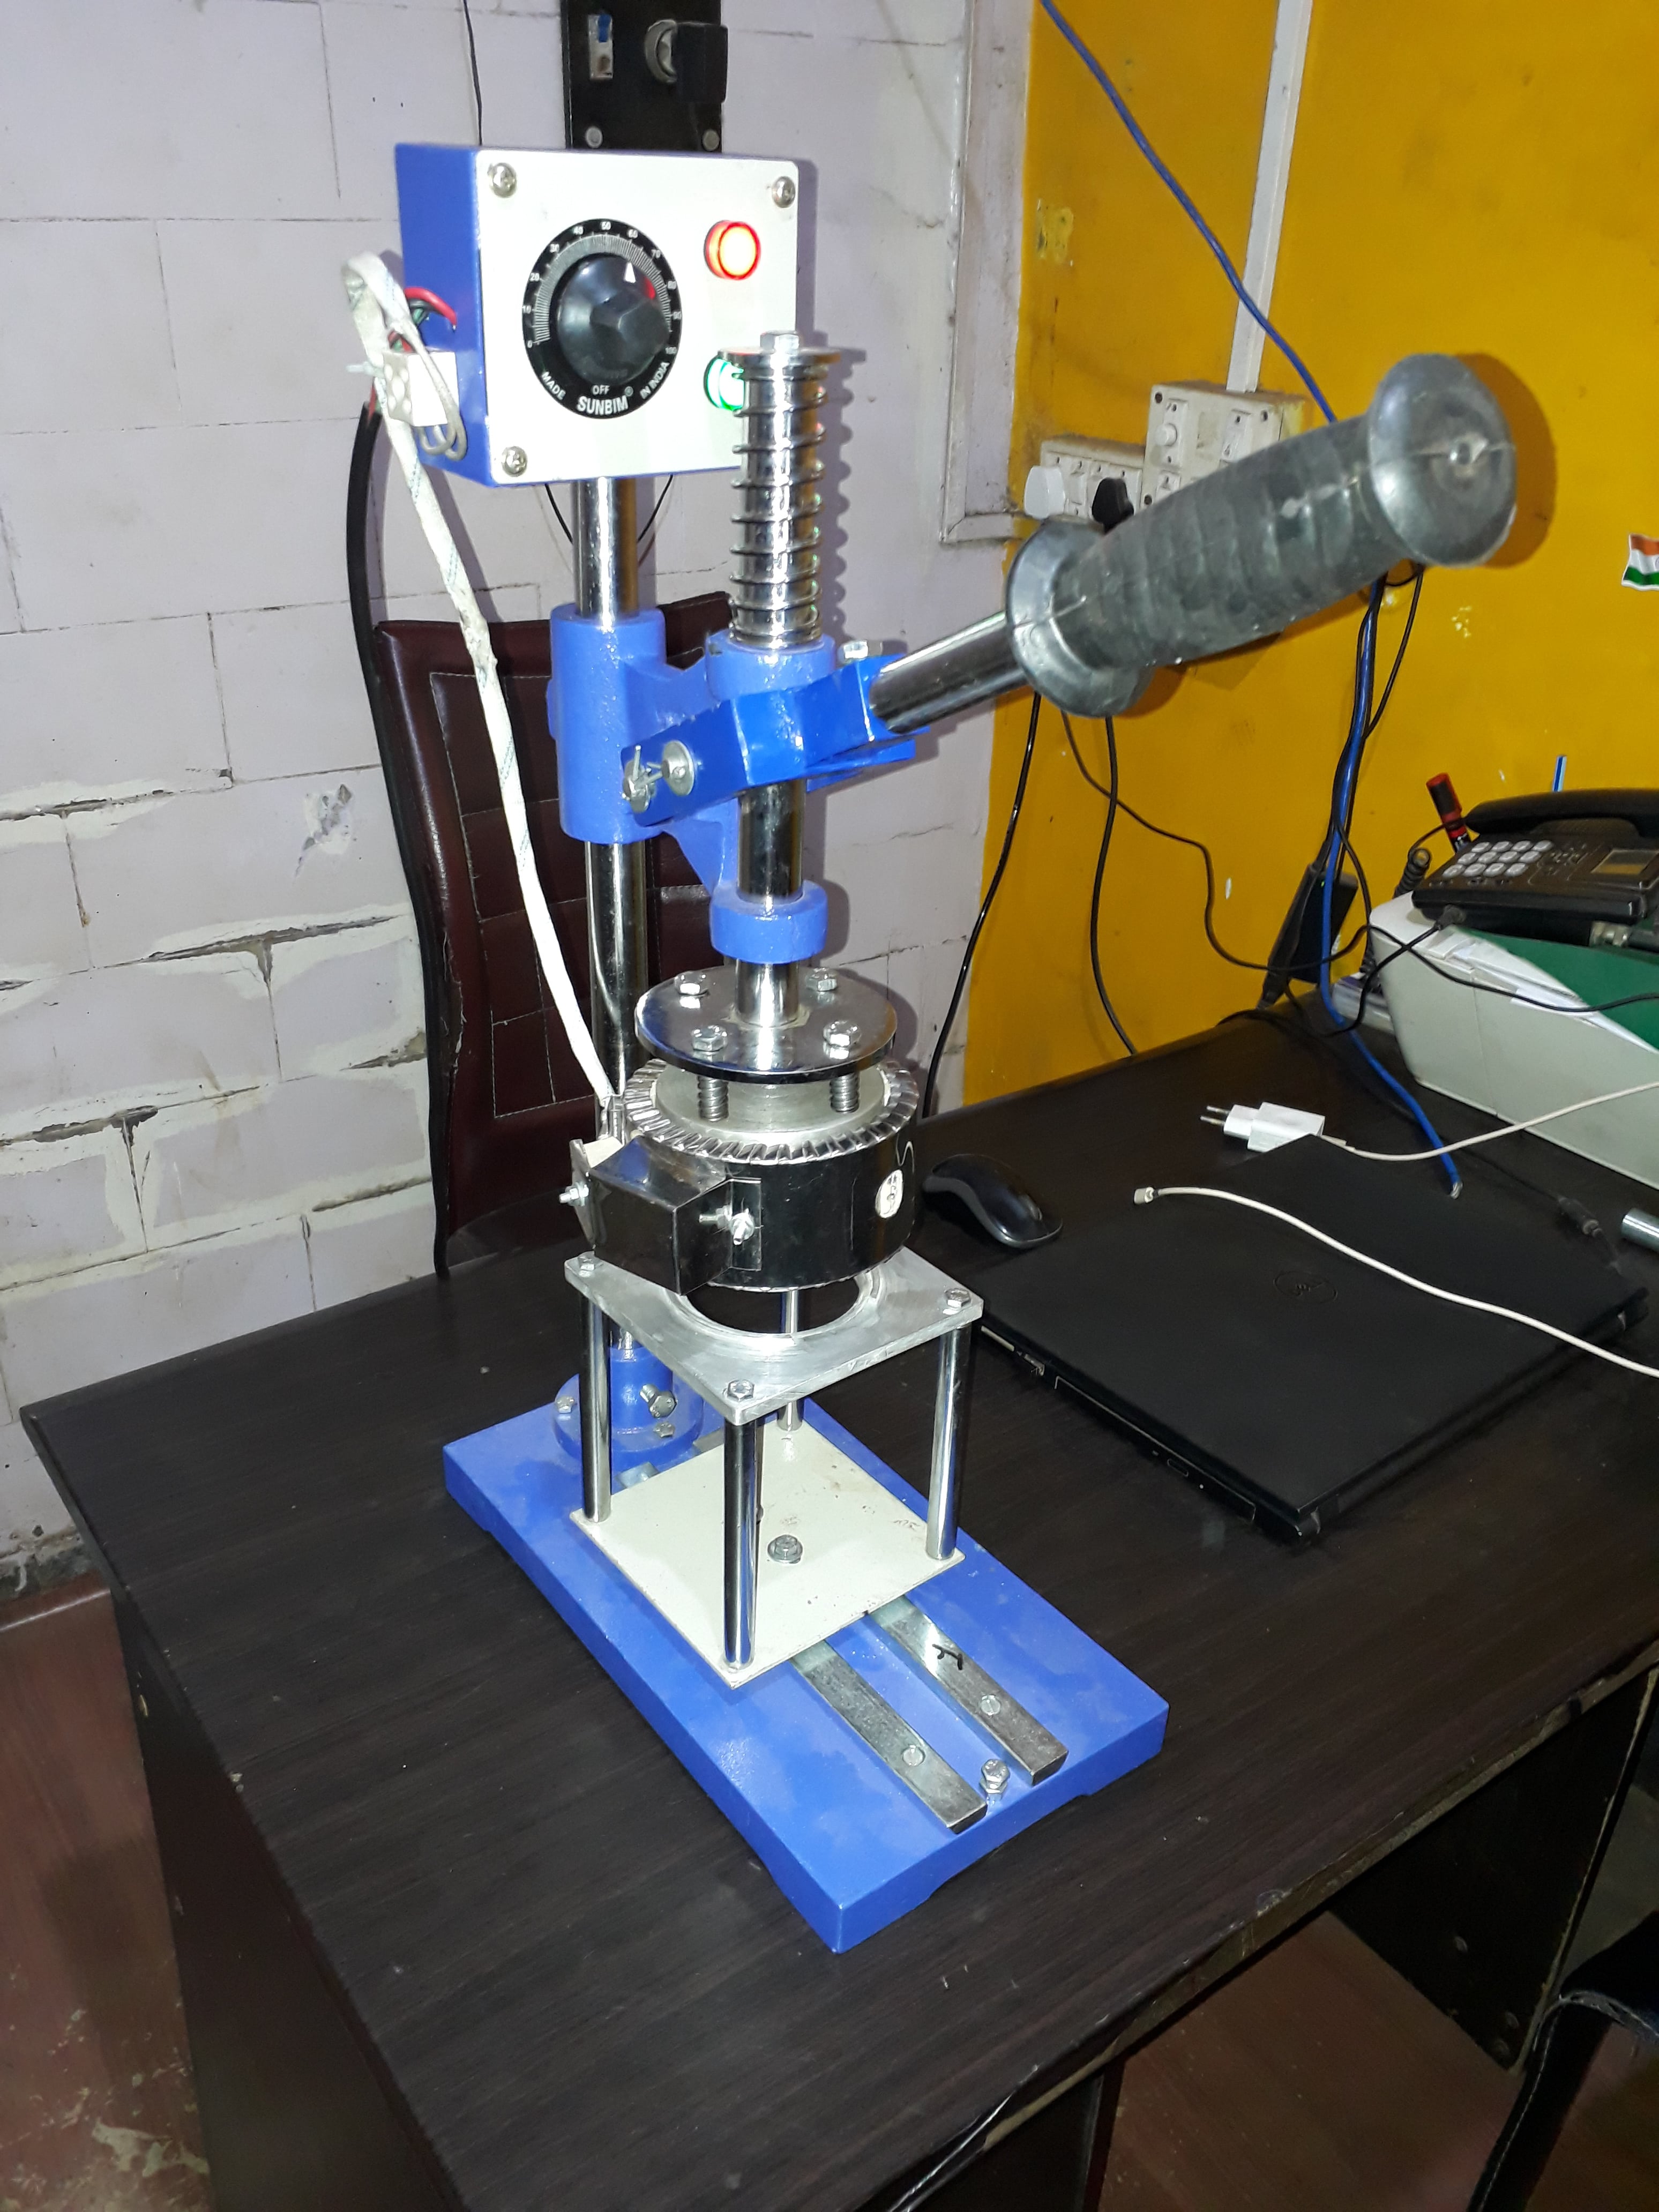 Manual Foil Sealing Machine Manufacturer, Suppliers, Traders, Exporters in Mumbai India